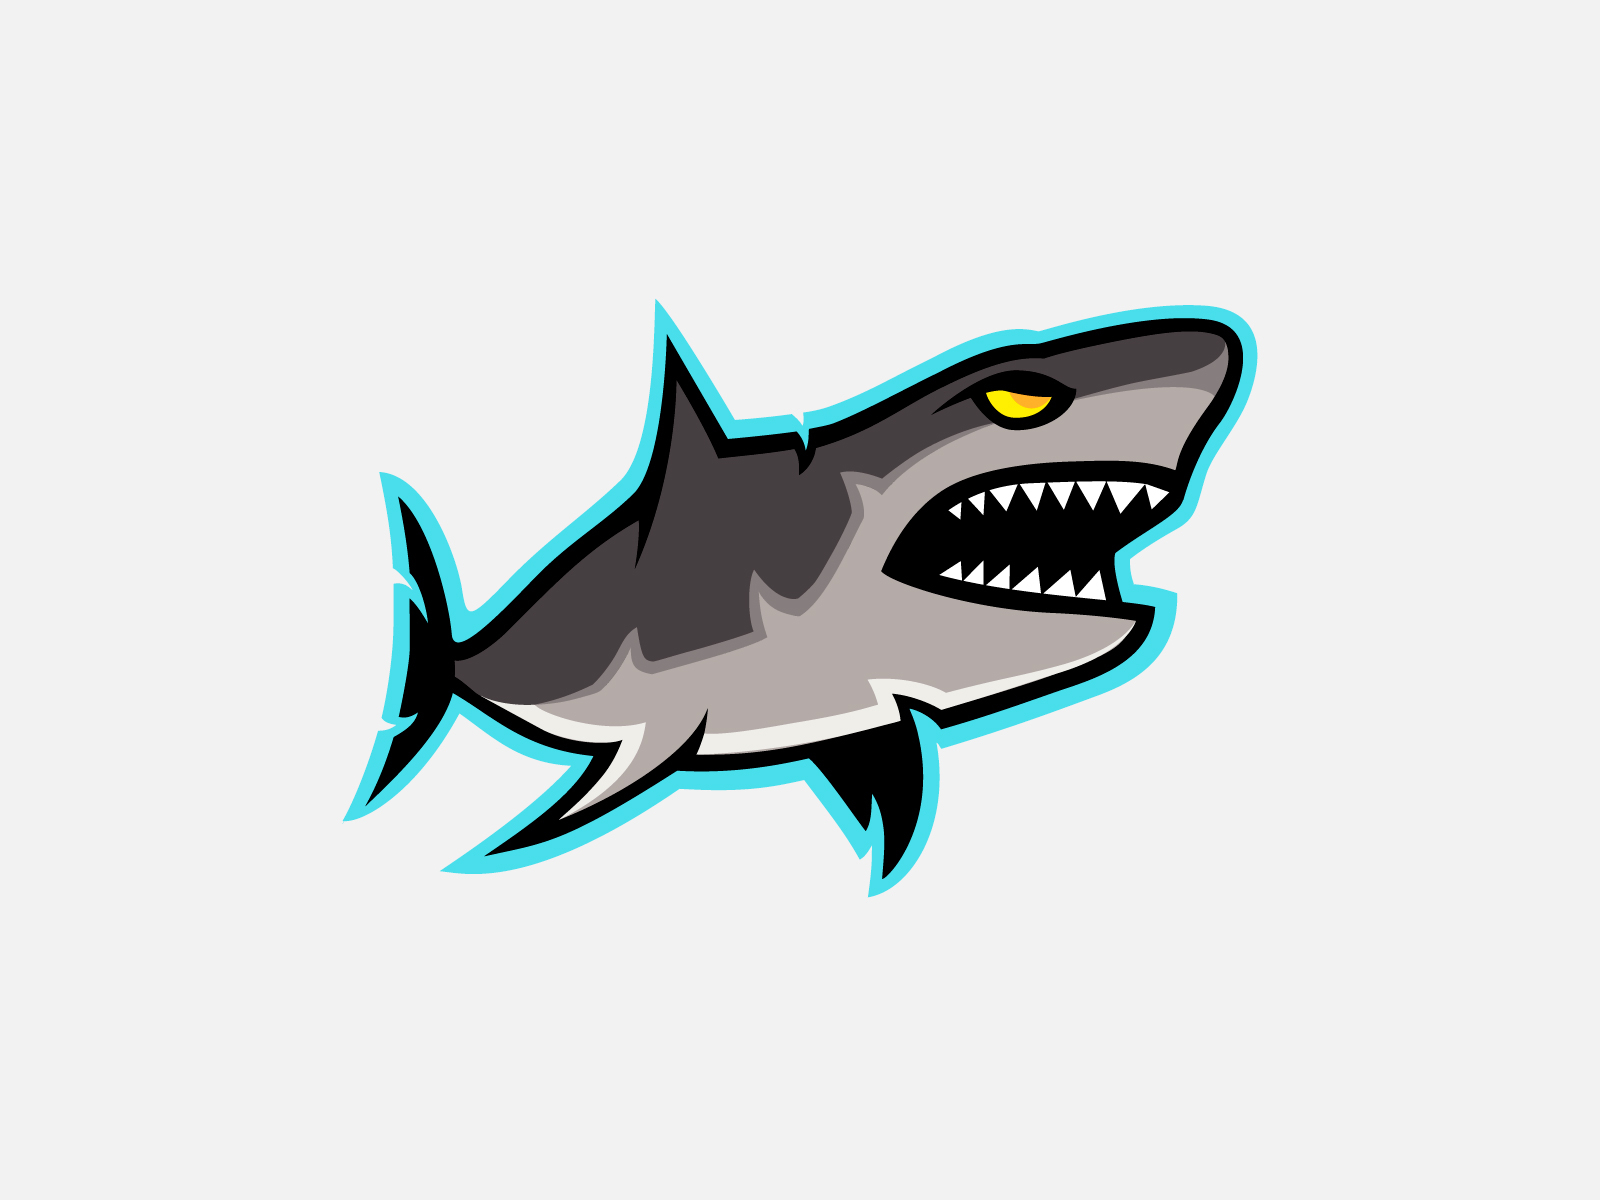 Shark by Sergei Ermilov on Dribbble